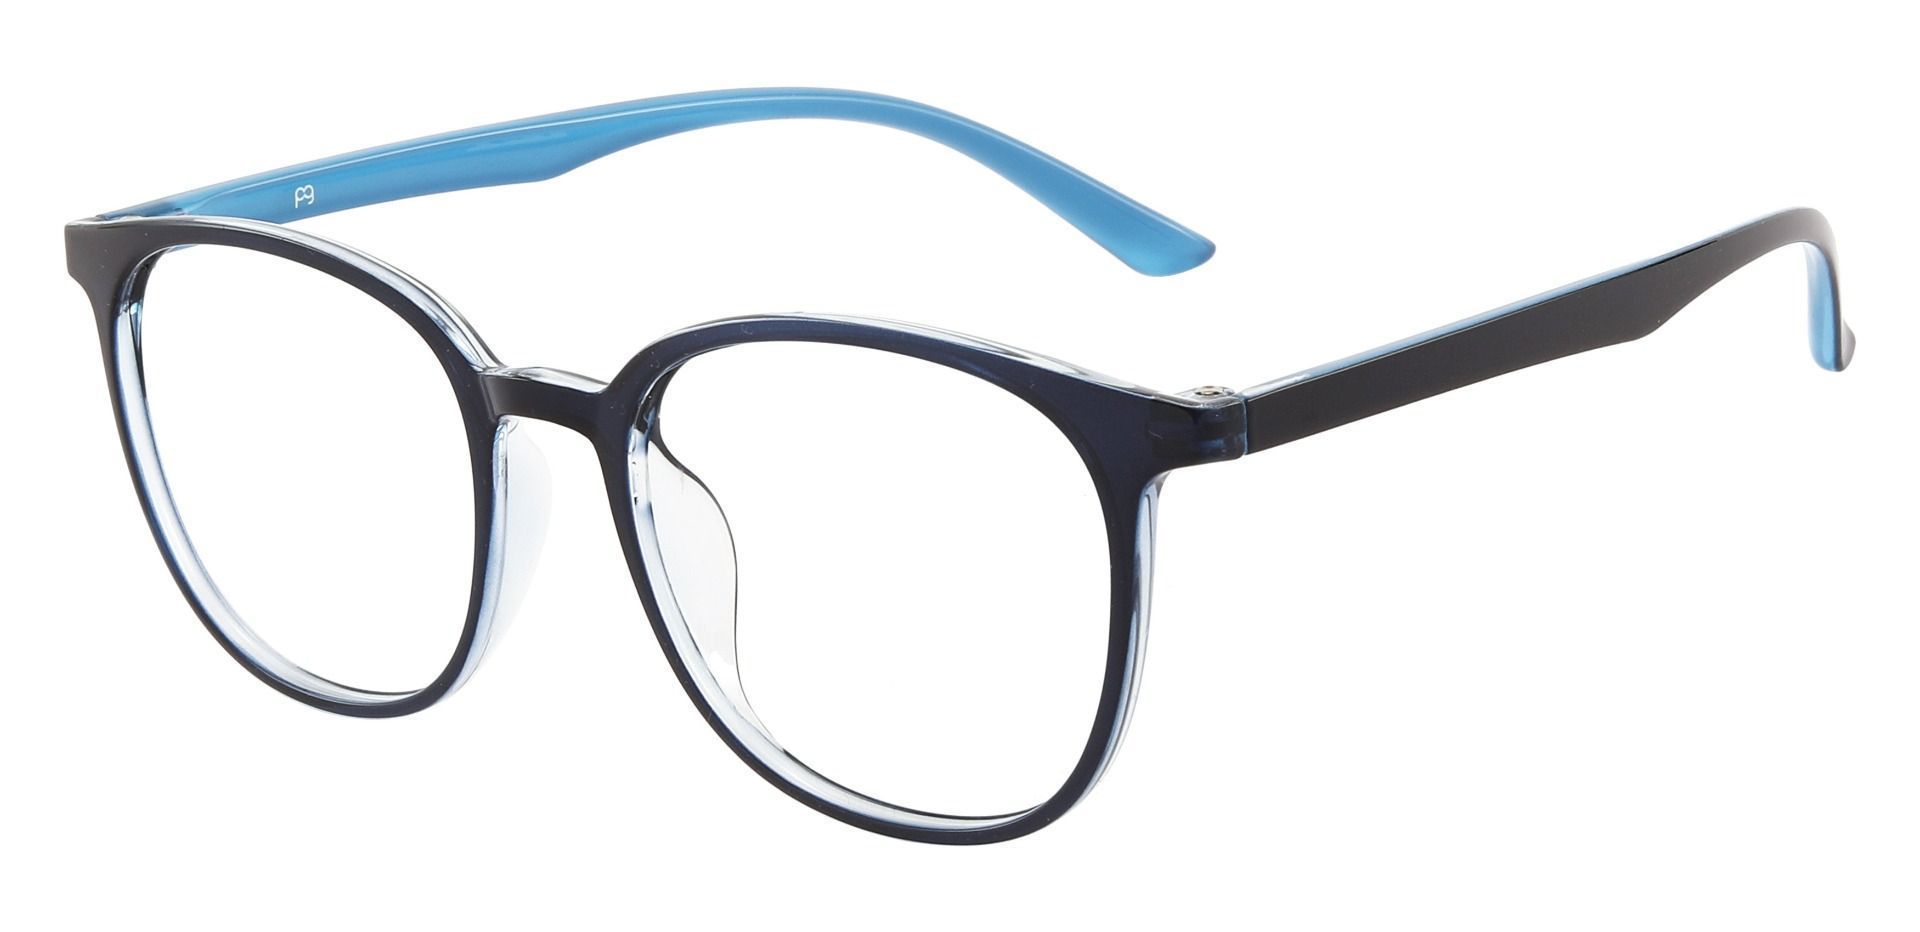 Kelso Square Prescription Glasses - Blue